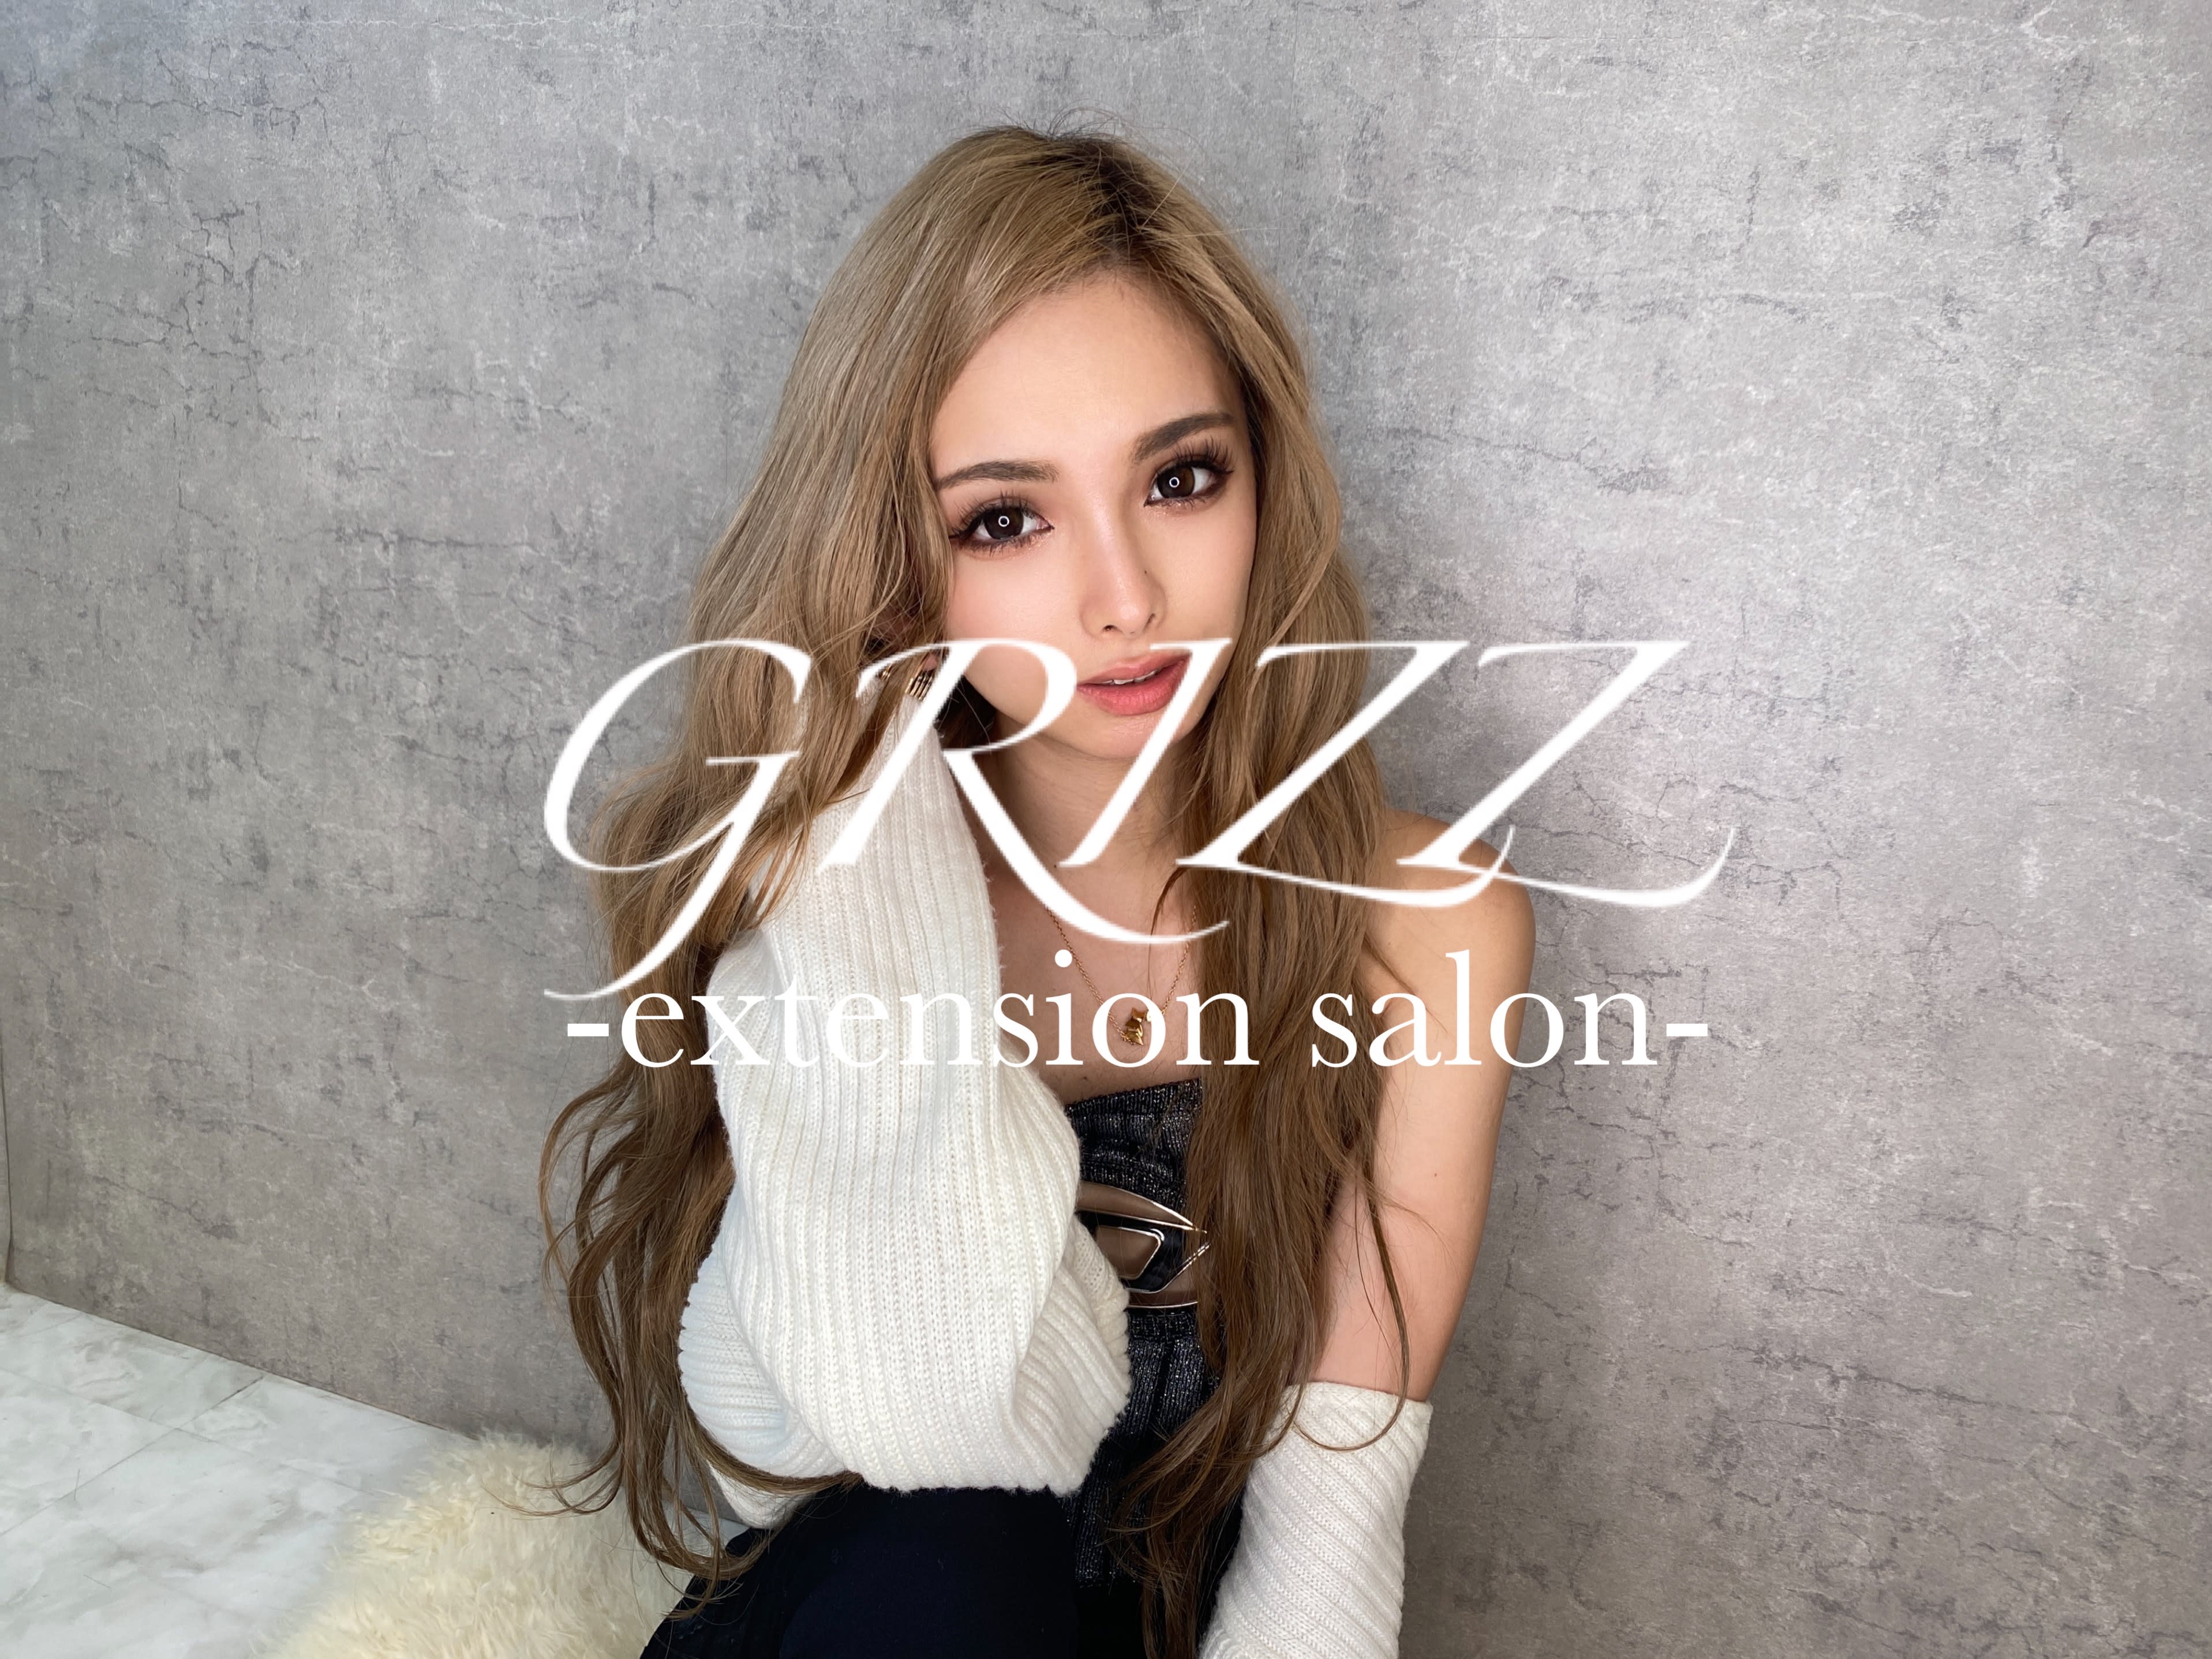 GRIZZ -extension salon-【グリス エクステ サロン】のスタイル紹介。GRIZZ -extension salon-×ロング